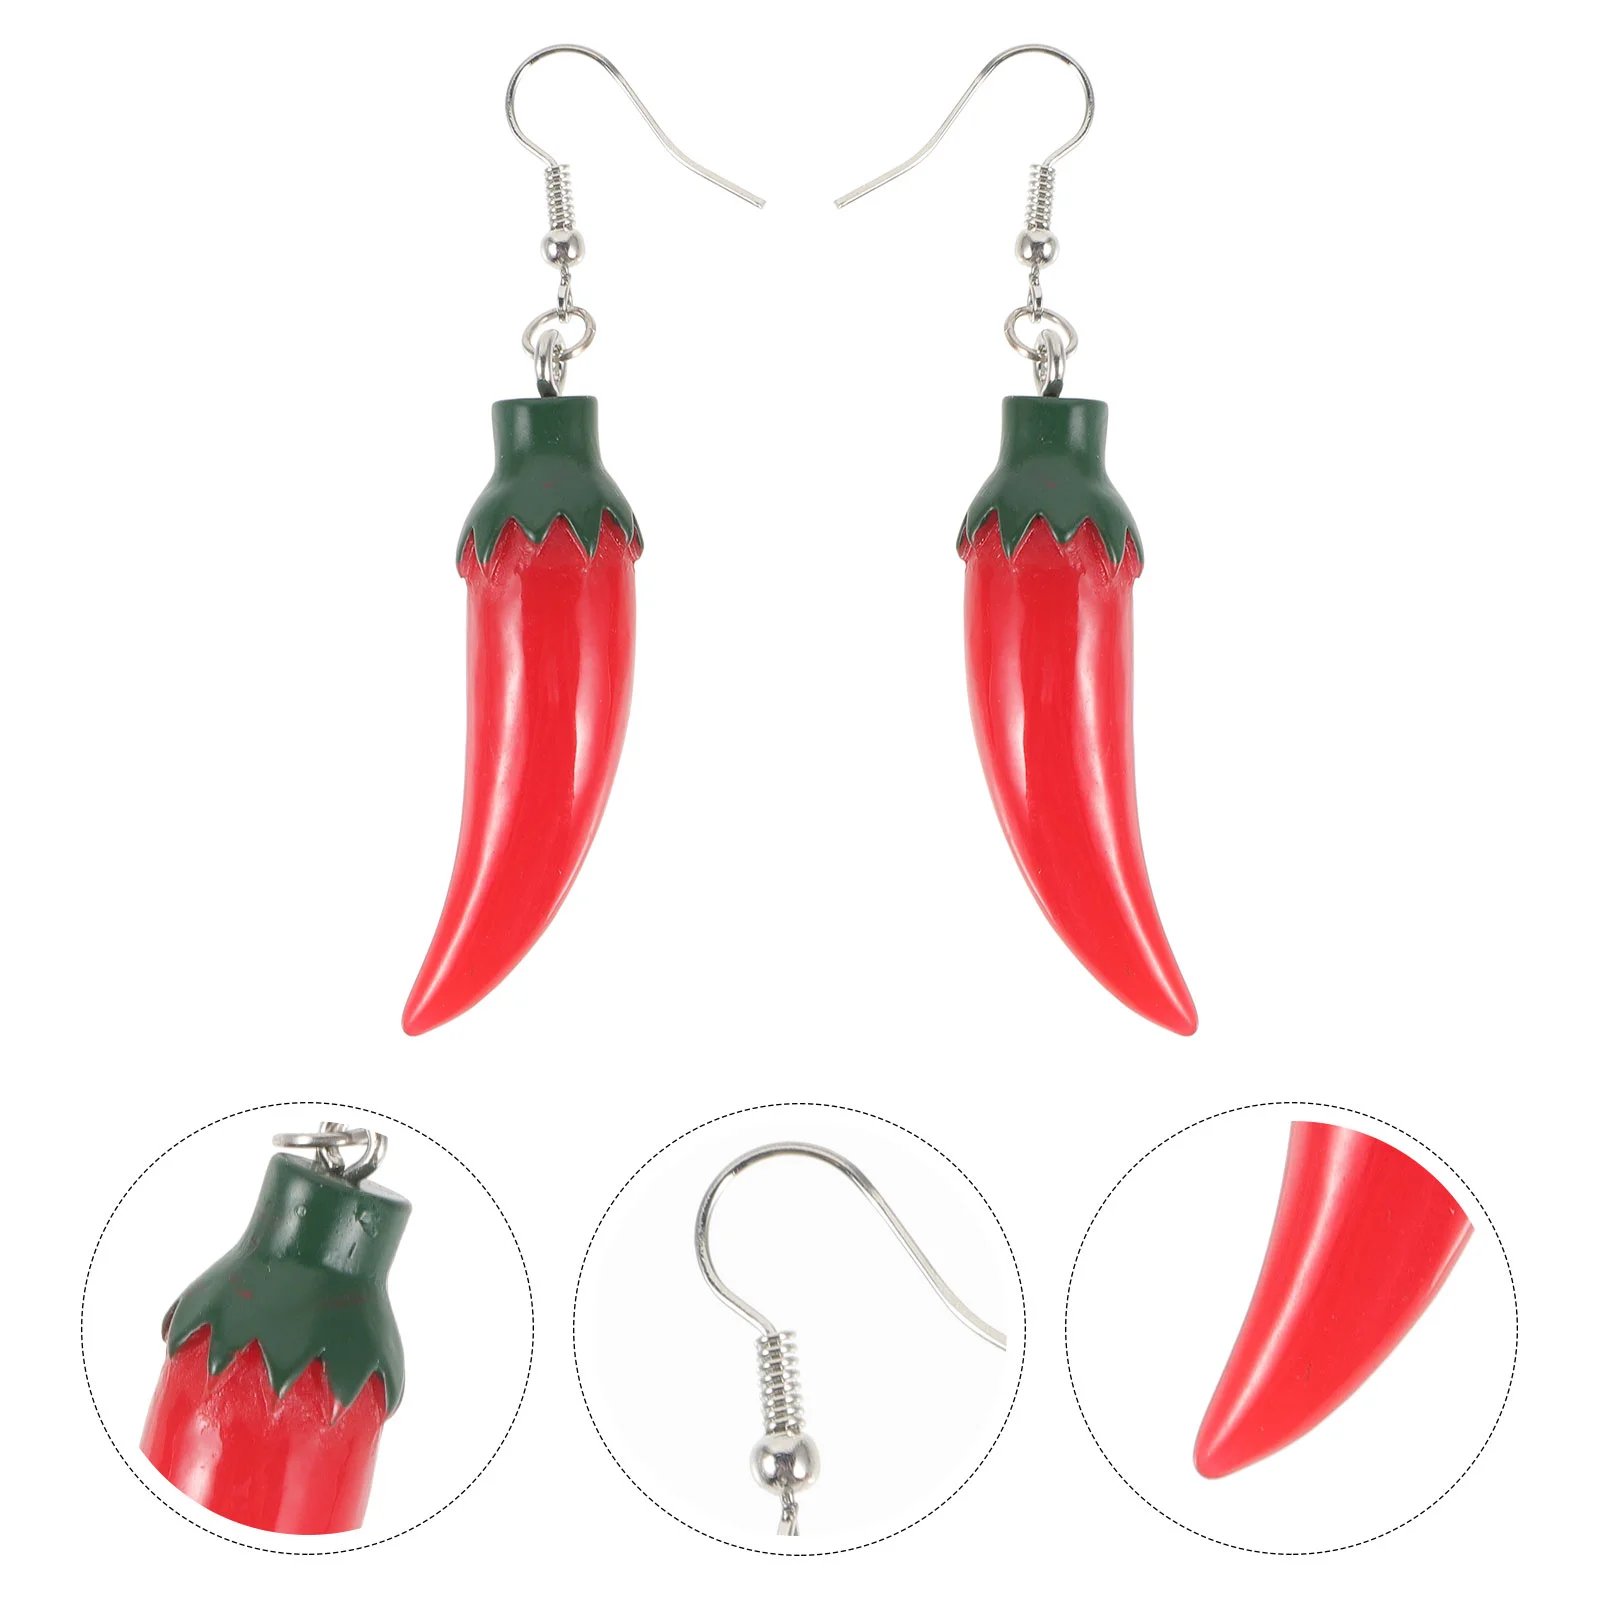 

Chili Earrings Pepper Fun Fashionable Jewelry Women Dangle Simulated Trendy Stud Dangling Lugs